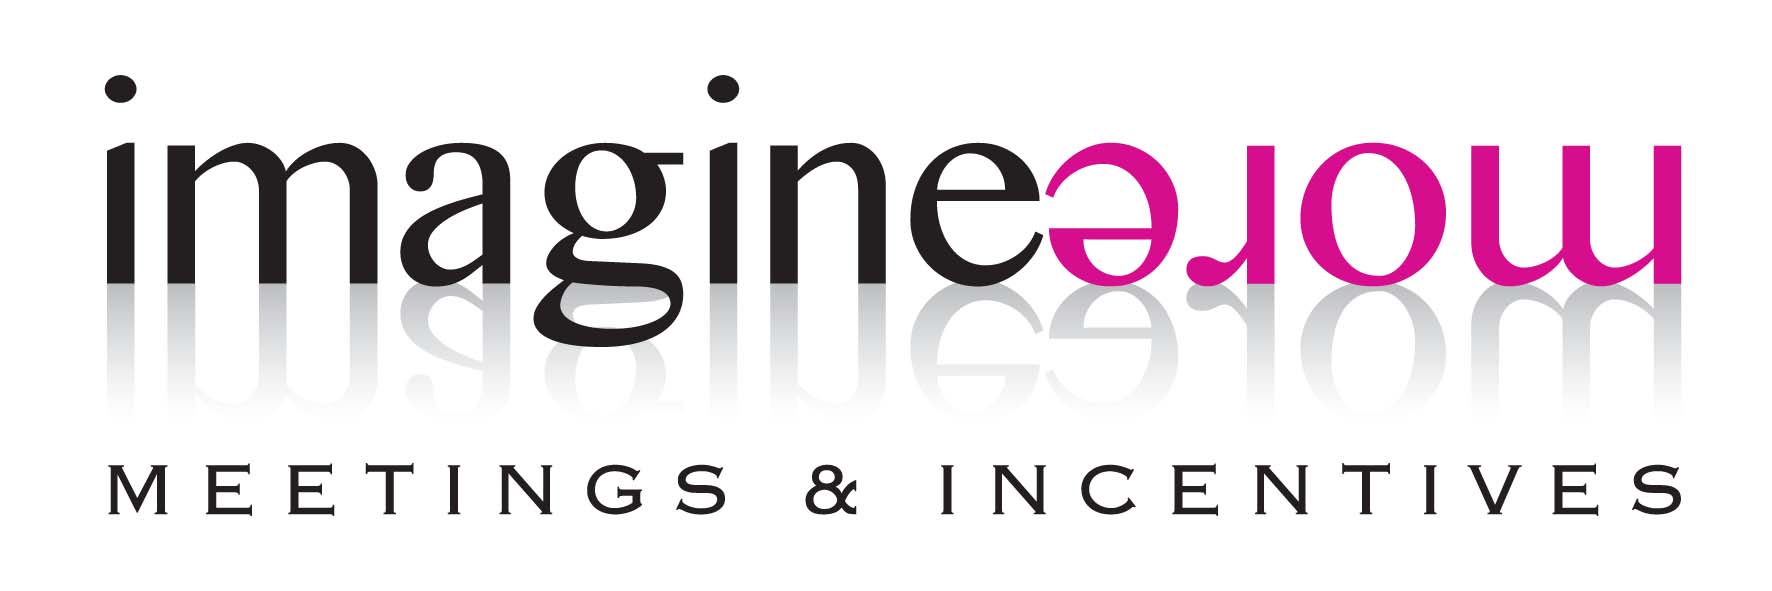 Imagine more logo